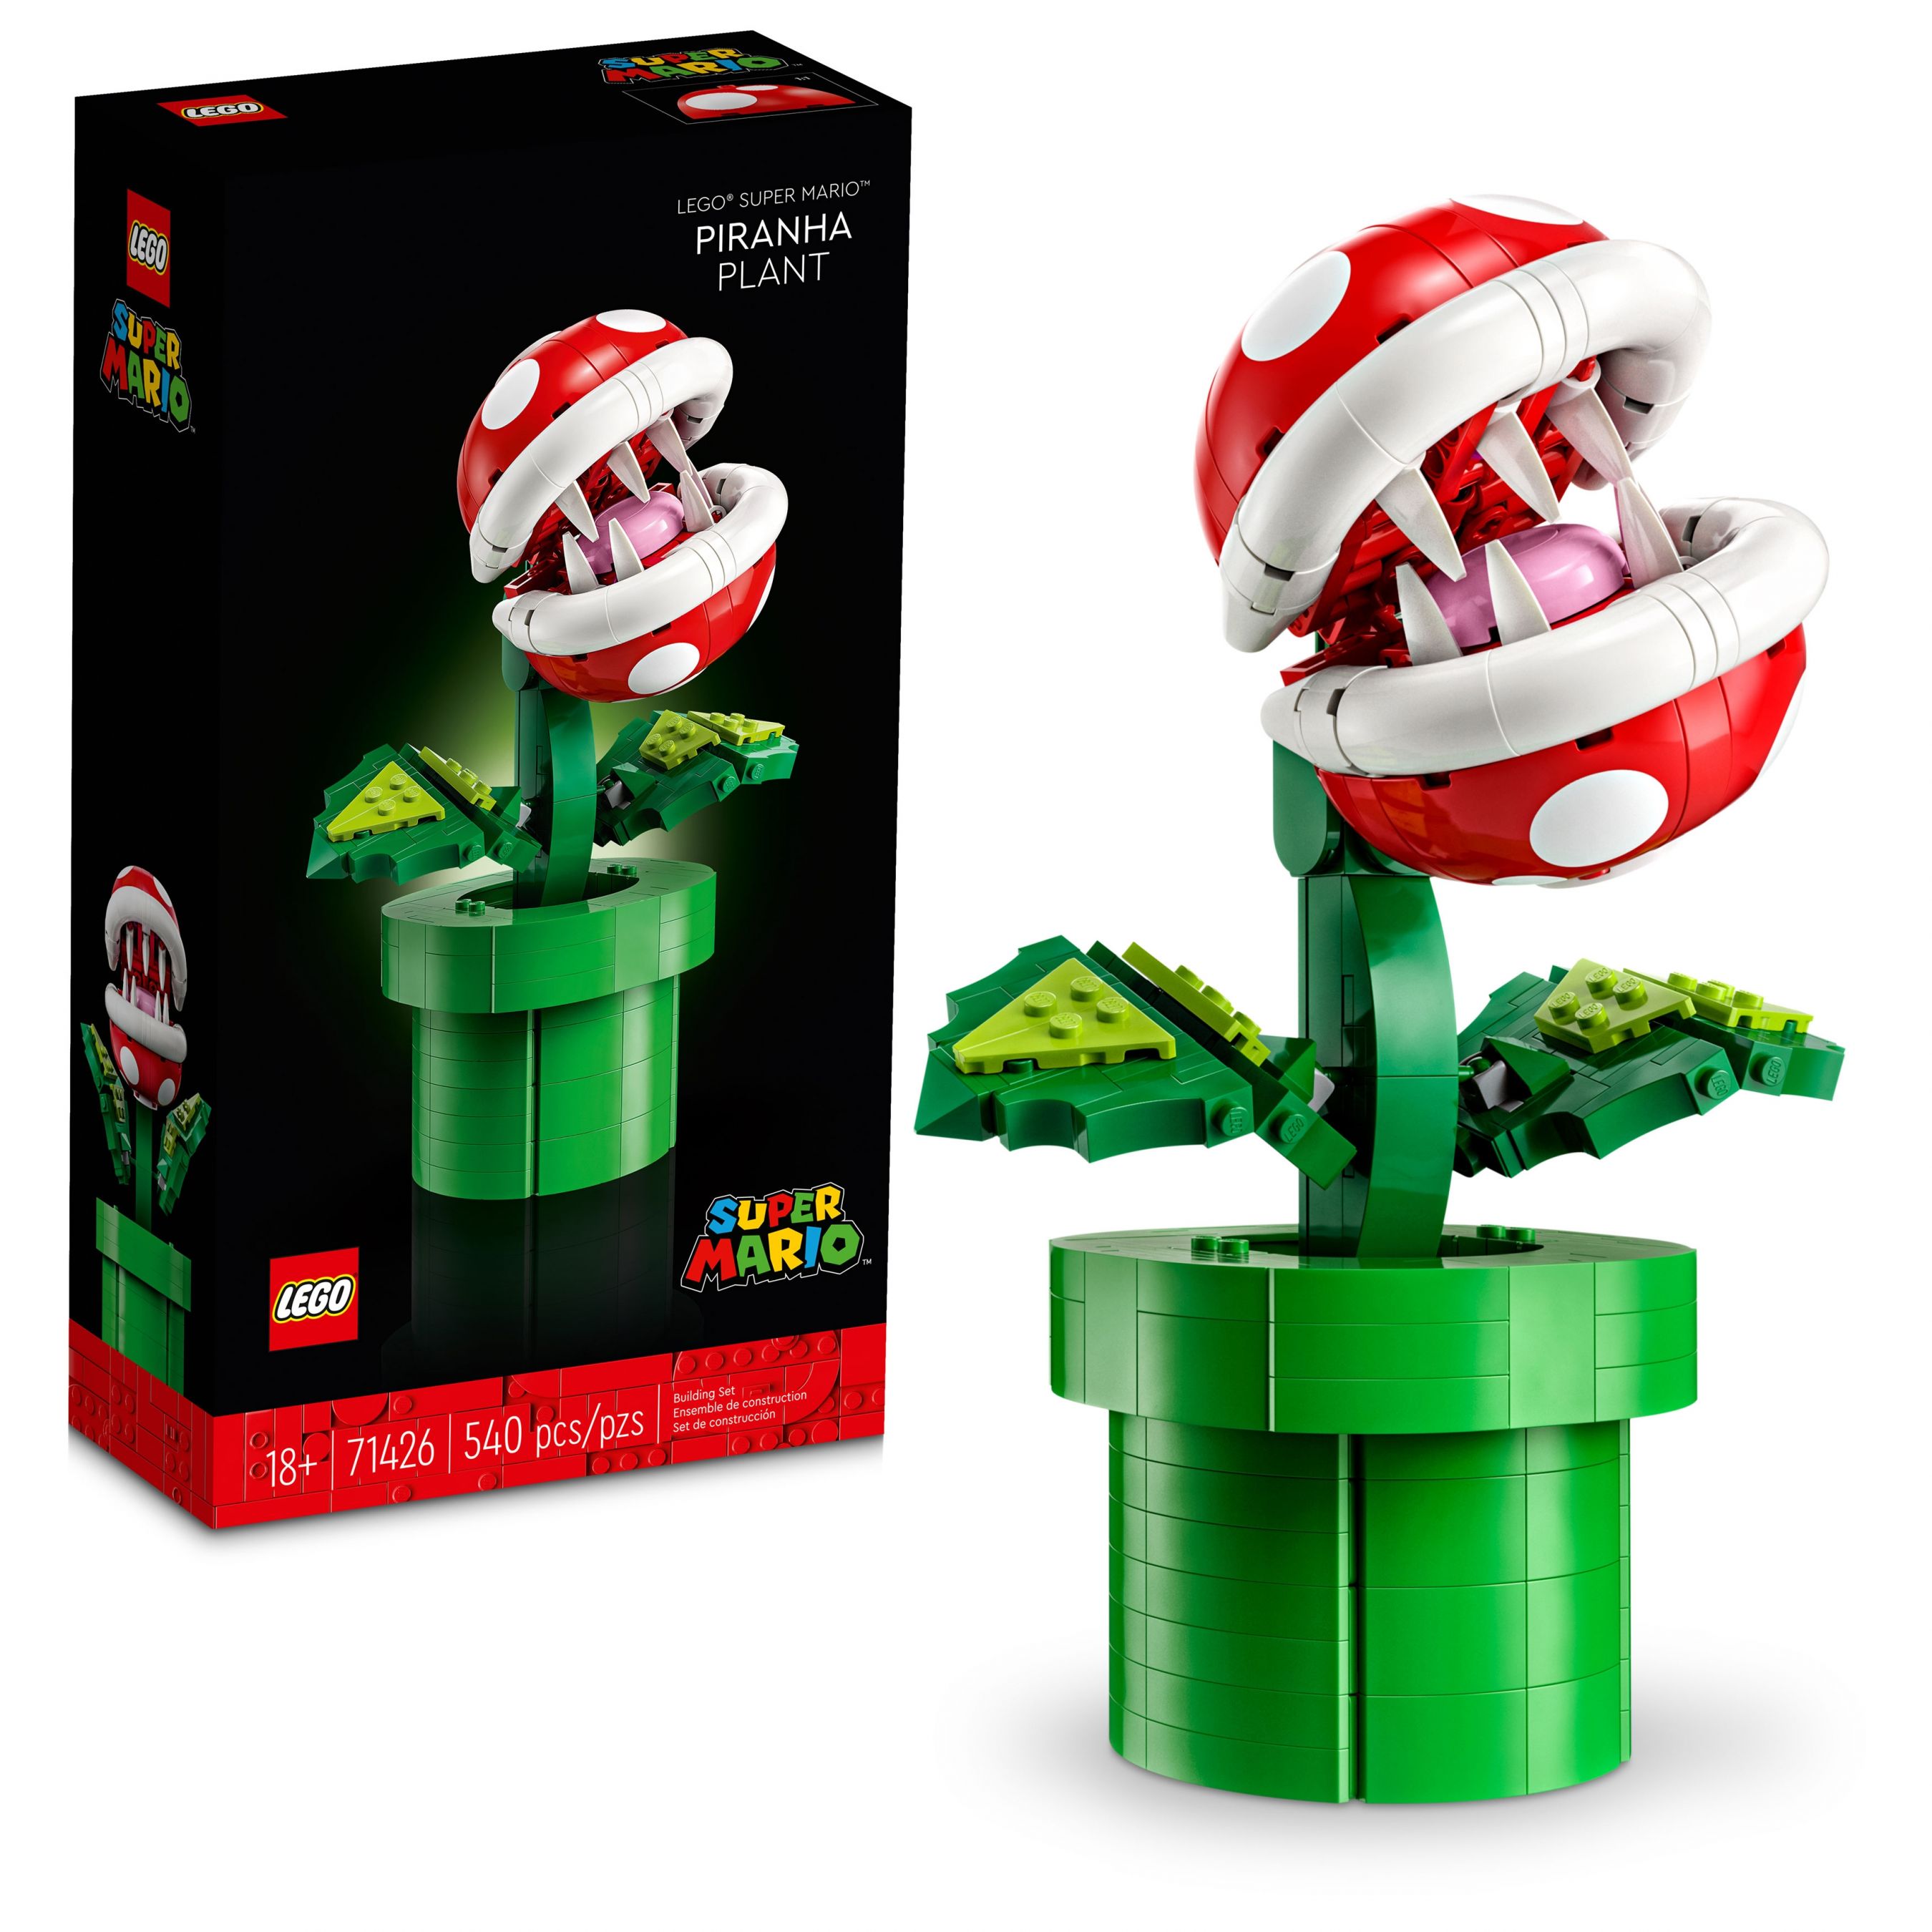 LEGO Super Mario 71426 Piranha-Pflanze LEGO_71426_boxprod_v39.jpg